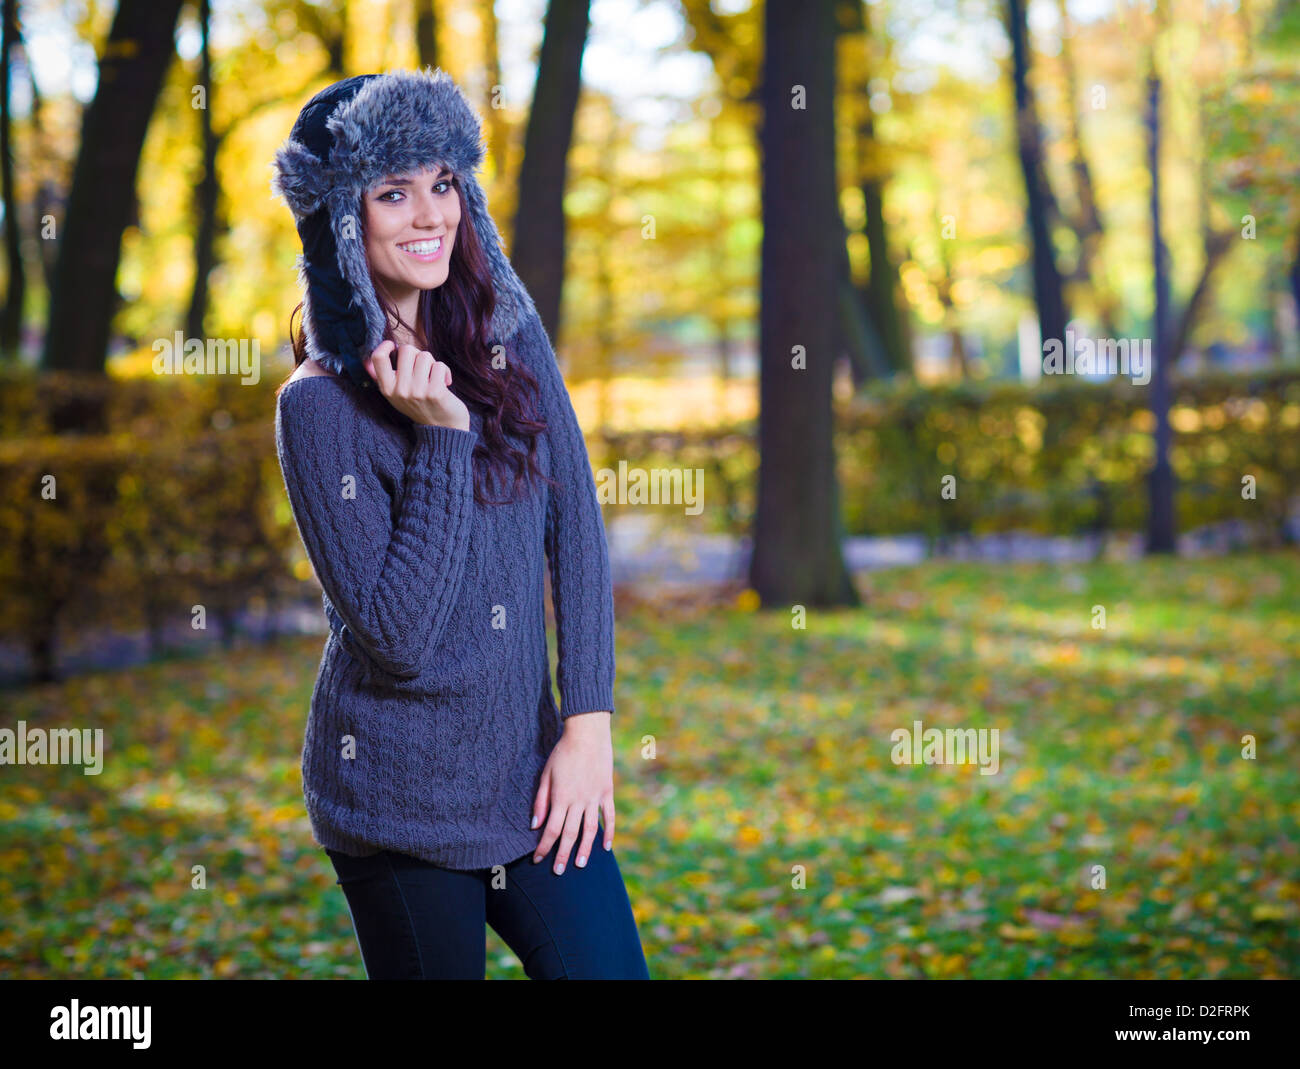 Cute woman posing in park Stock Photo